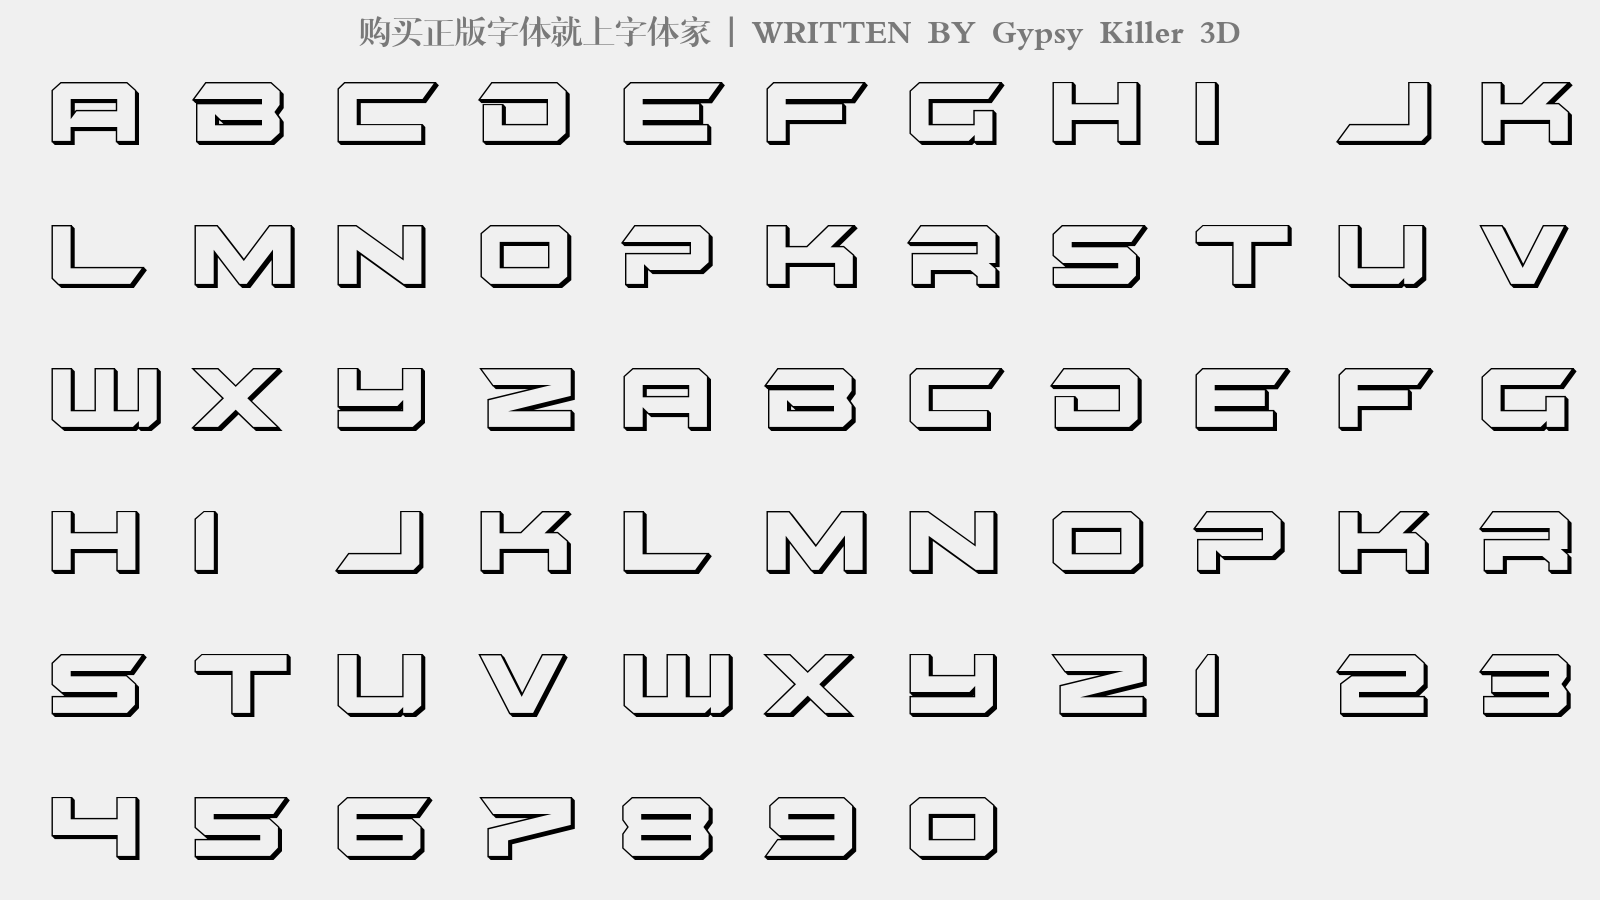 Gypsy Killer 3D - 大写字母/小写字母/数字